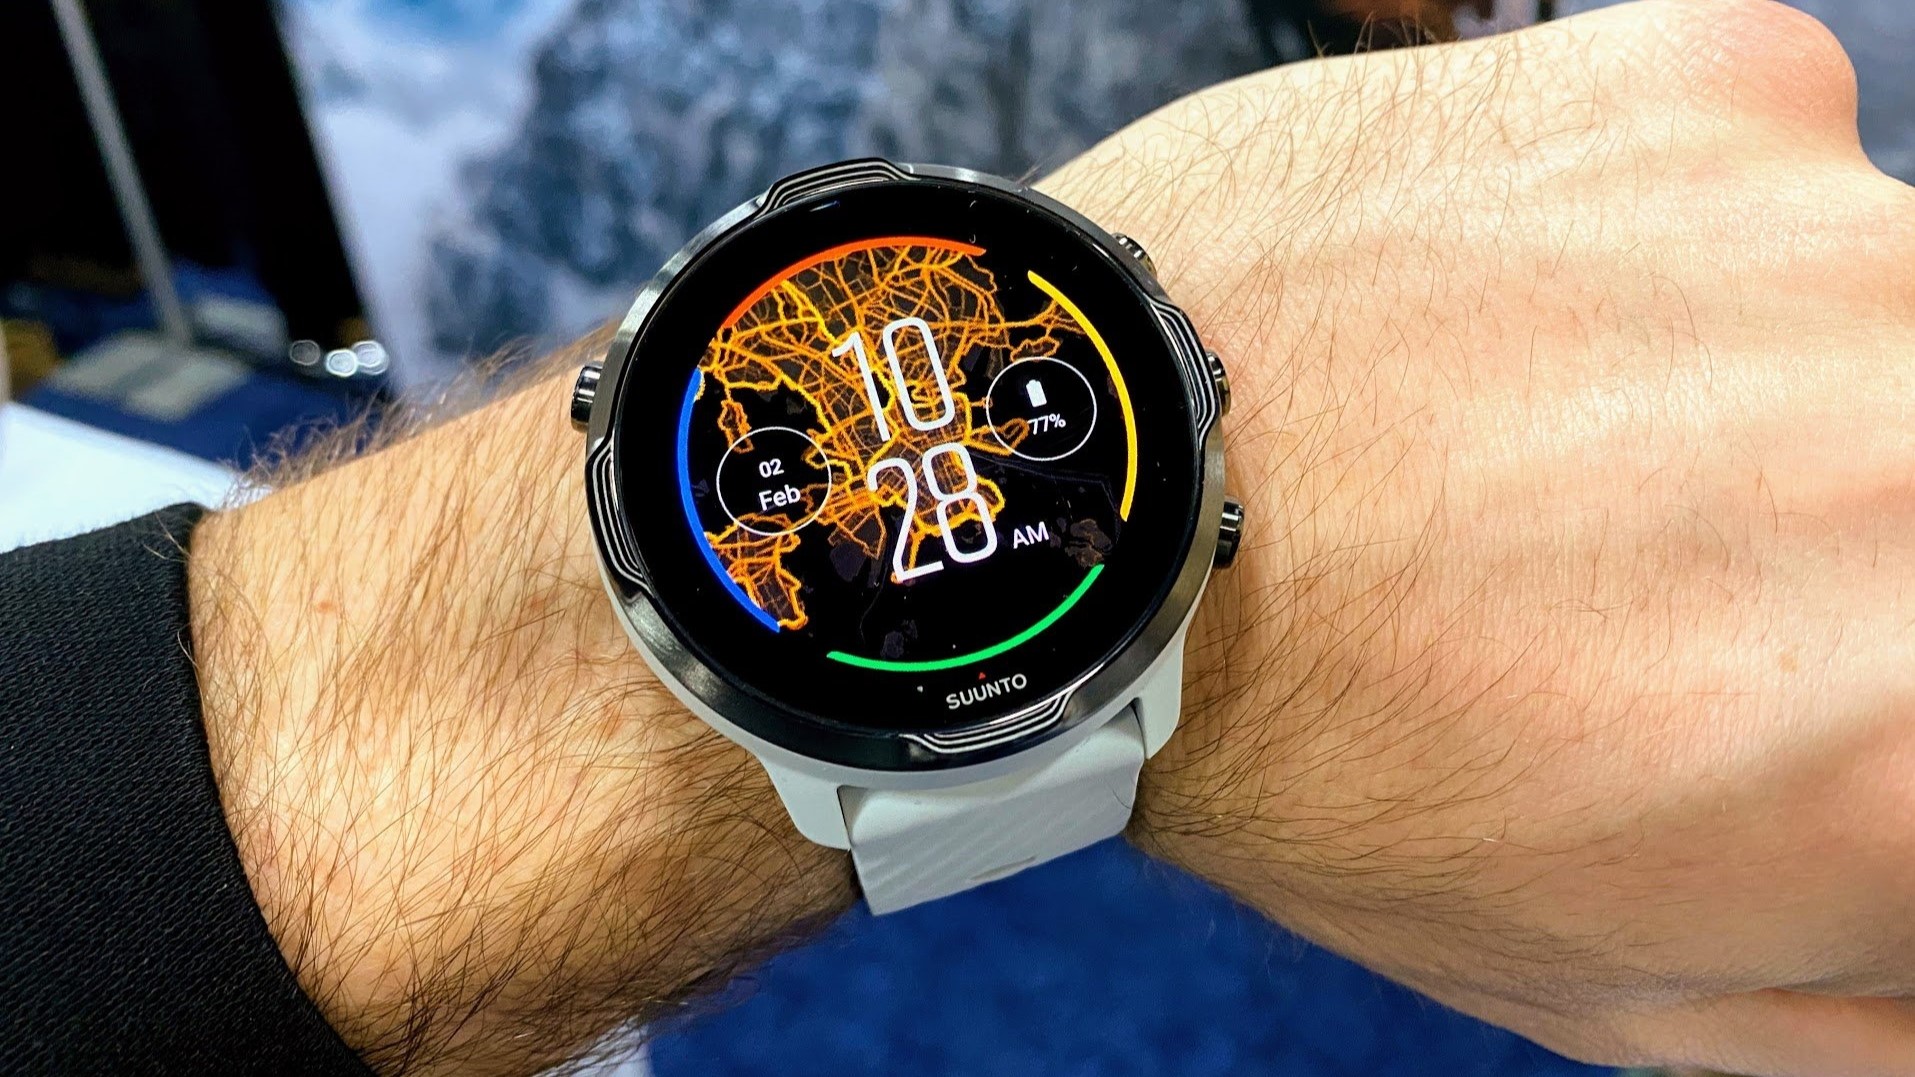 Suunto 7 Wear OS smartwatch worn on a wrist.